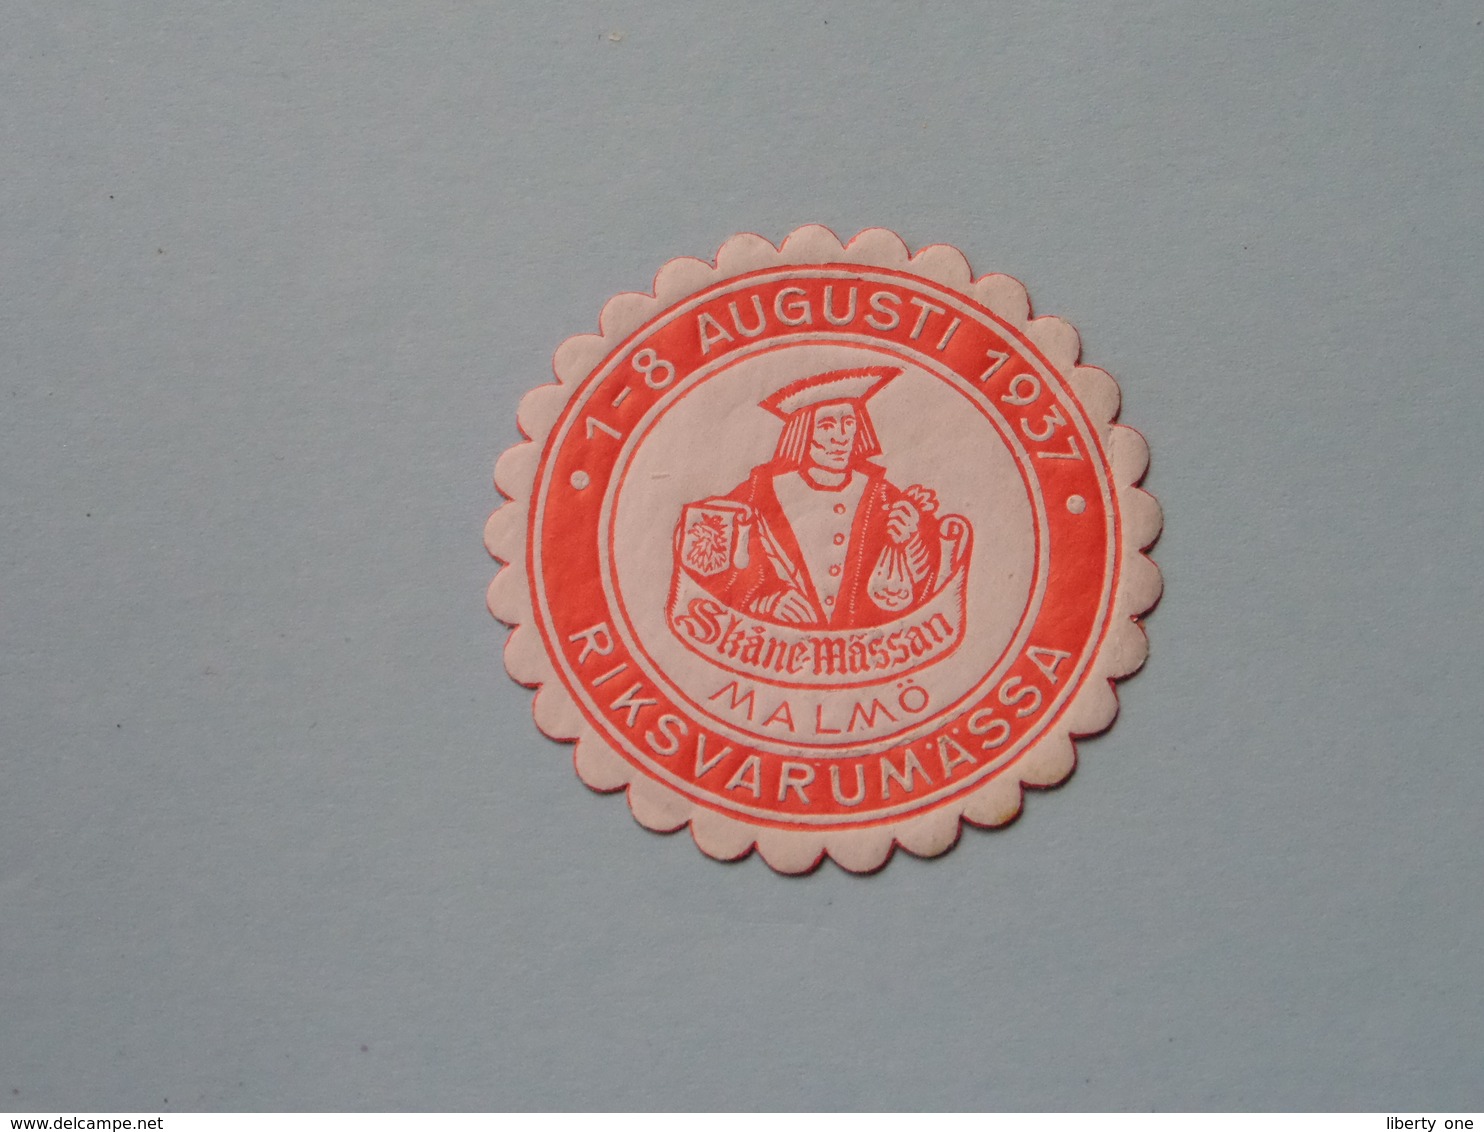 1937 RIKSVARUMASSA MALMÖ ( Sluitzegel Timbres-Vignettes Picture Stamp Verschlussmarken ) - Cachets Généralité